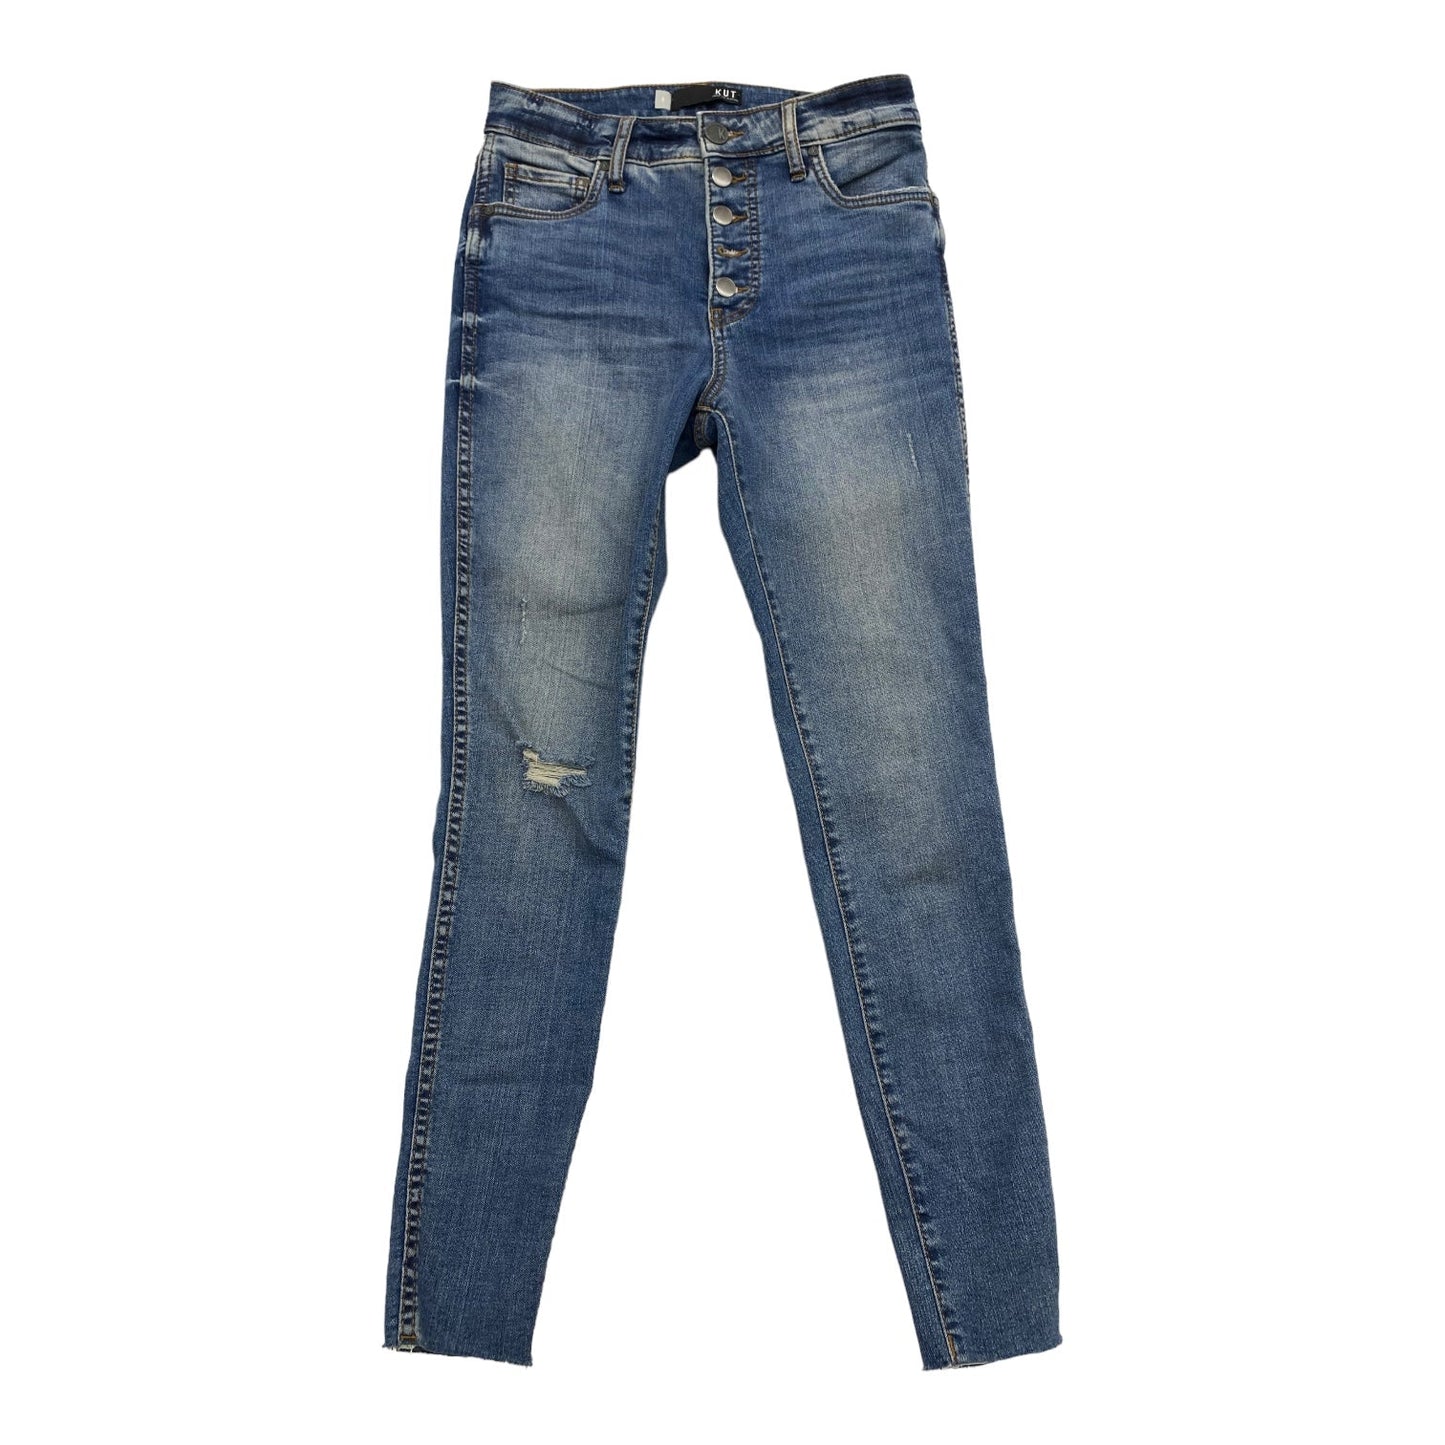 Blue Denim Jeans Skinny Kut, Size 0